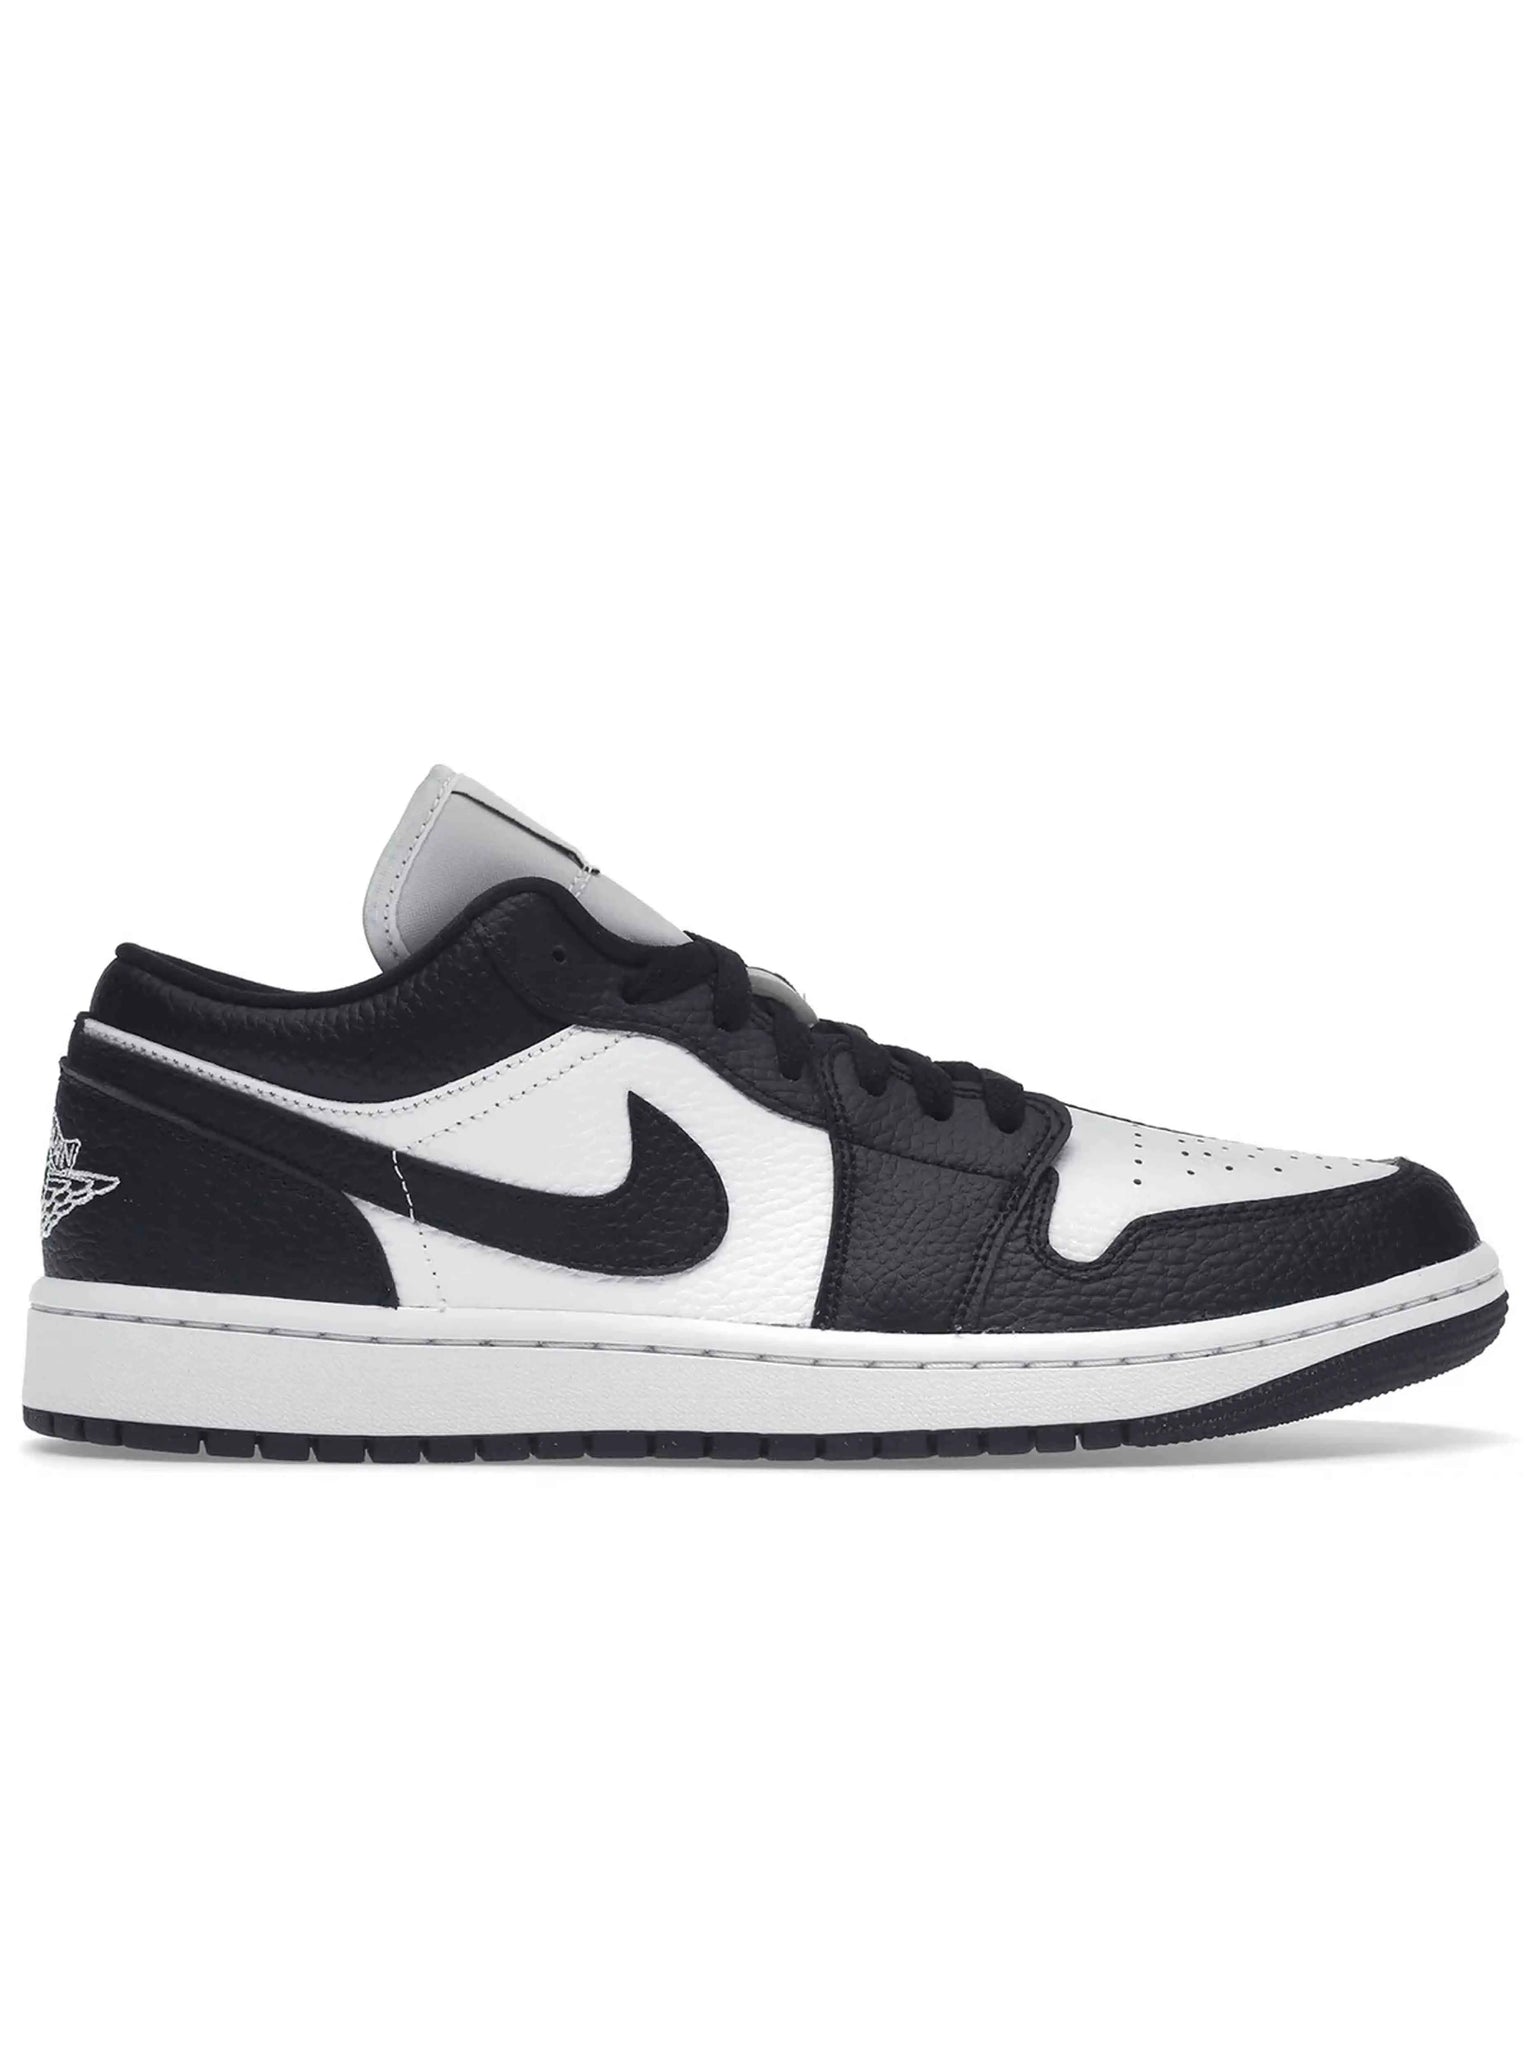 Nike Air Jordan 1 Low SE Homage Split White Black [W] Prior